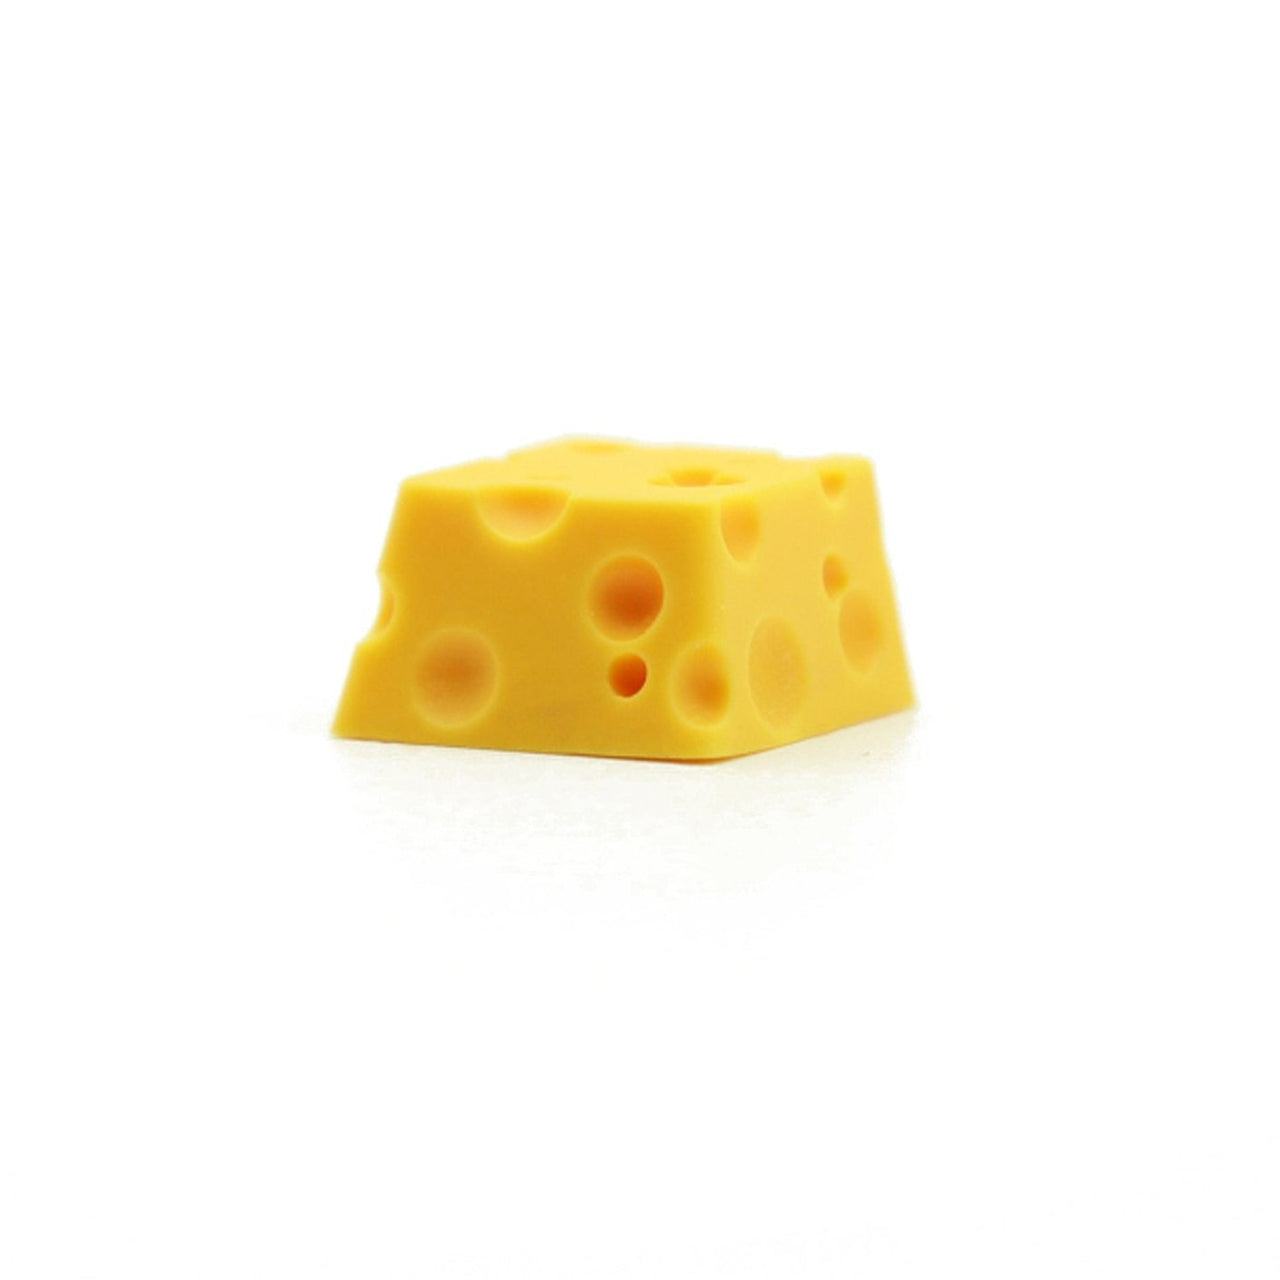 Cheese Resin Keycaps For Custom Mechanical Keyboard